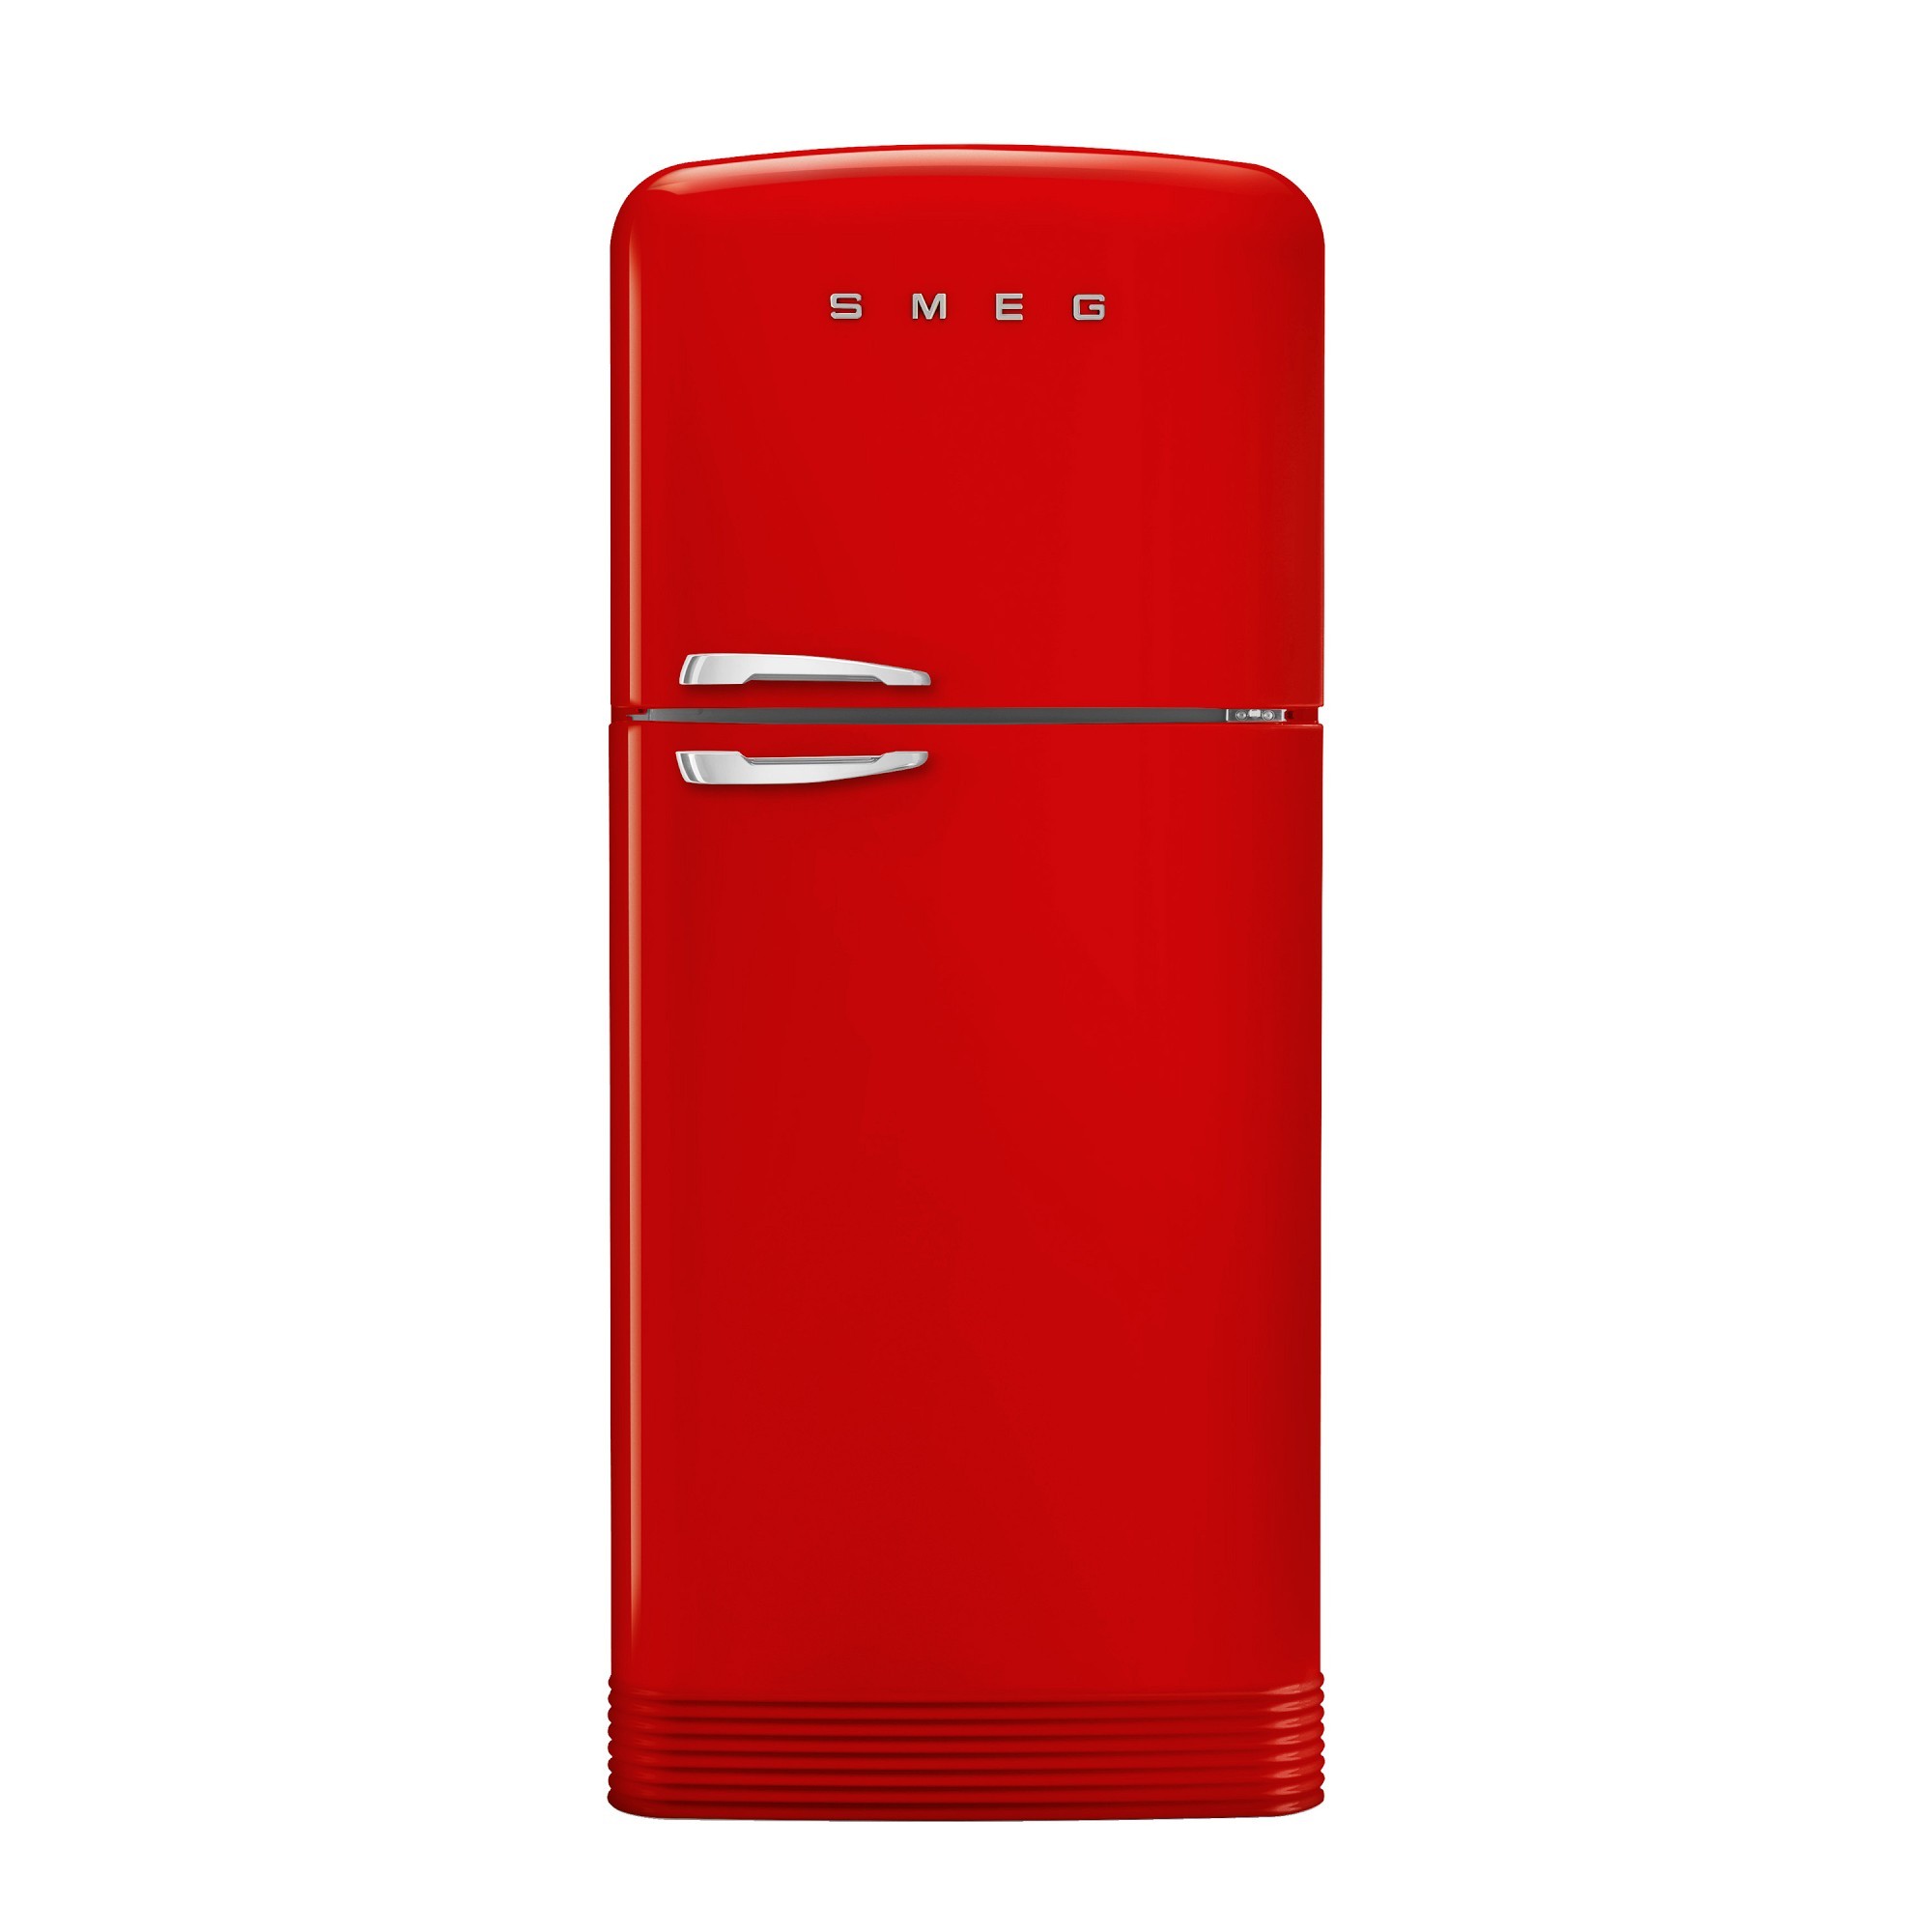 SMEG FAB 50 Refrigerator in Red